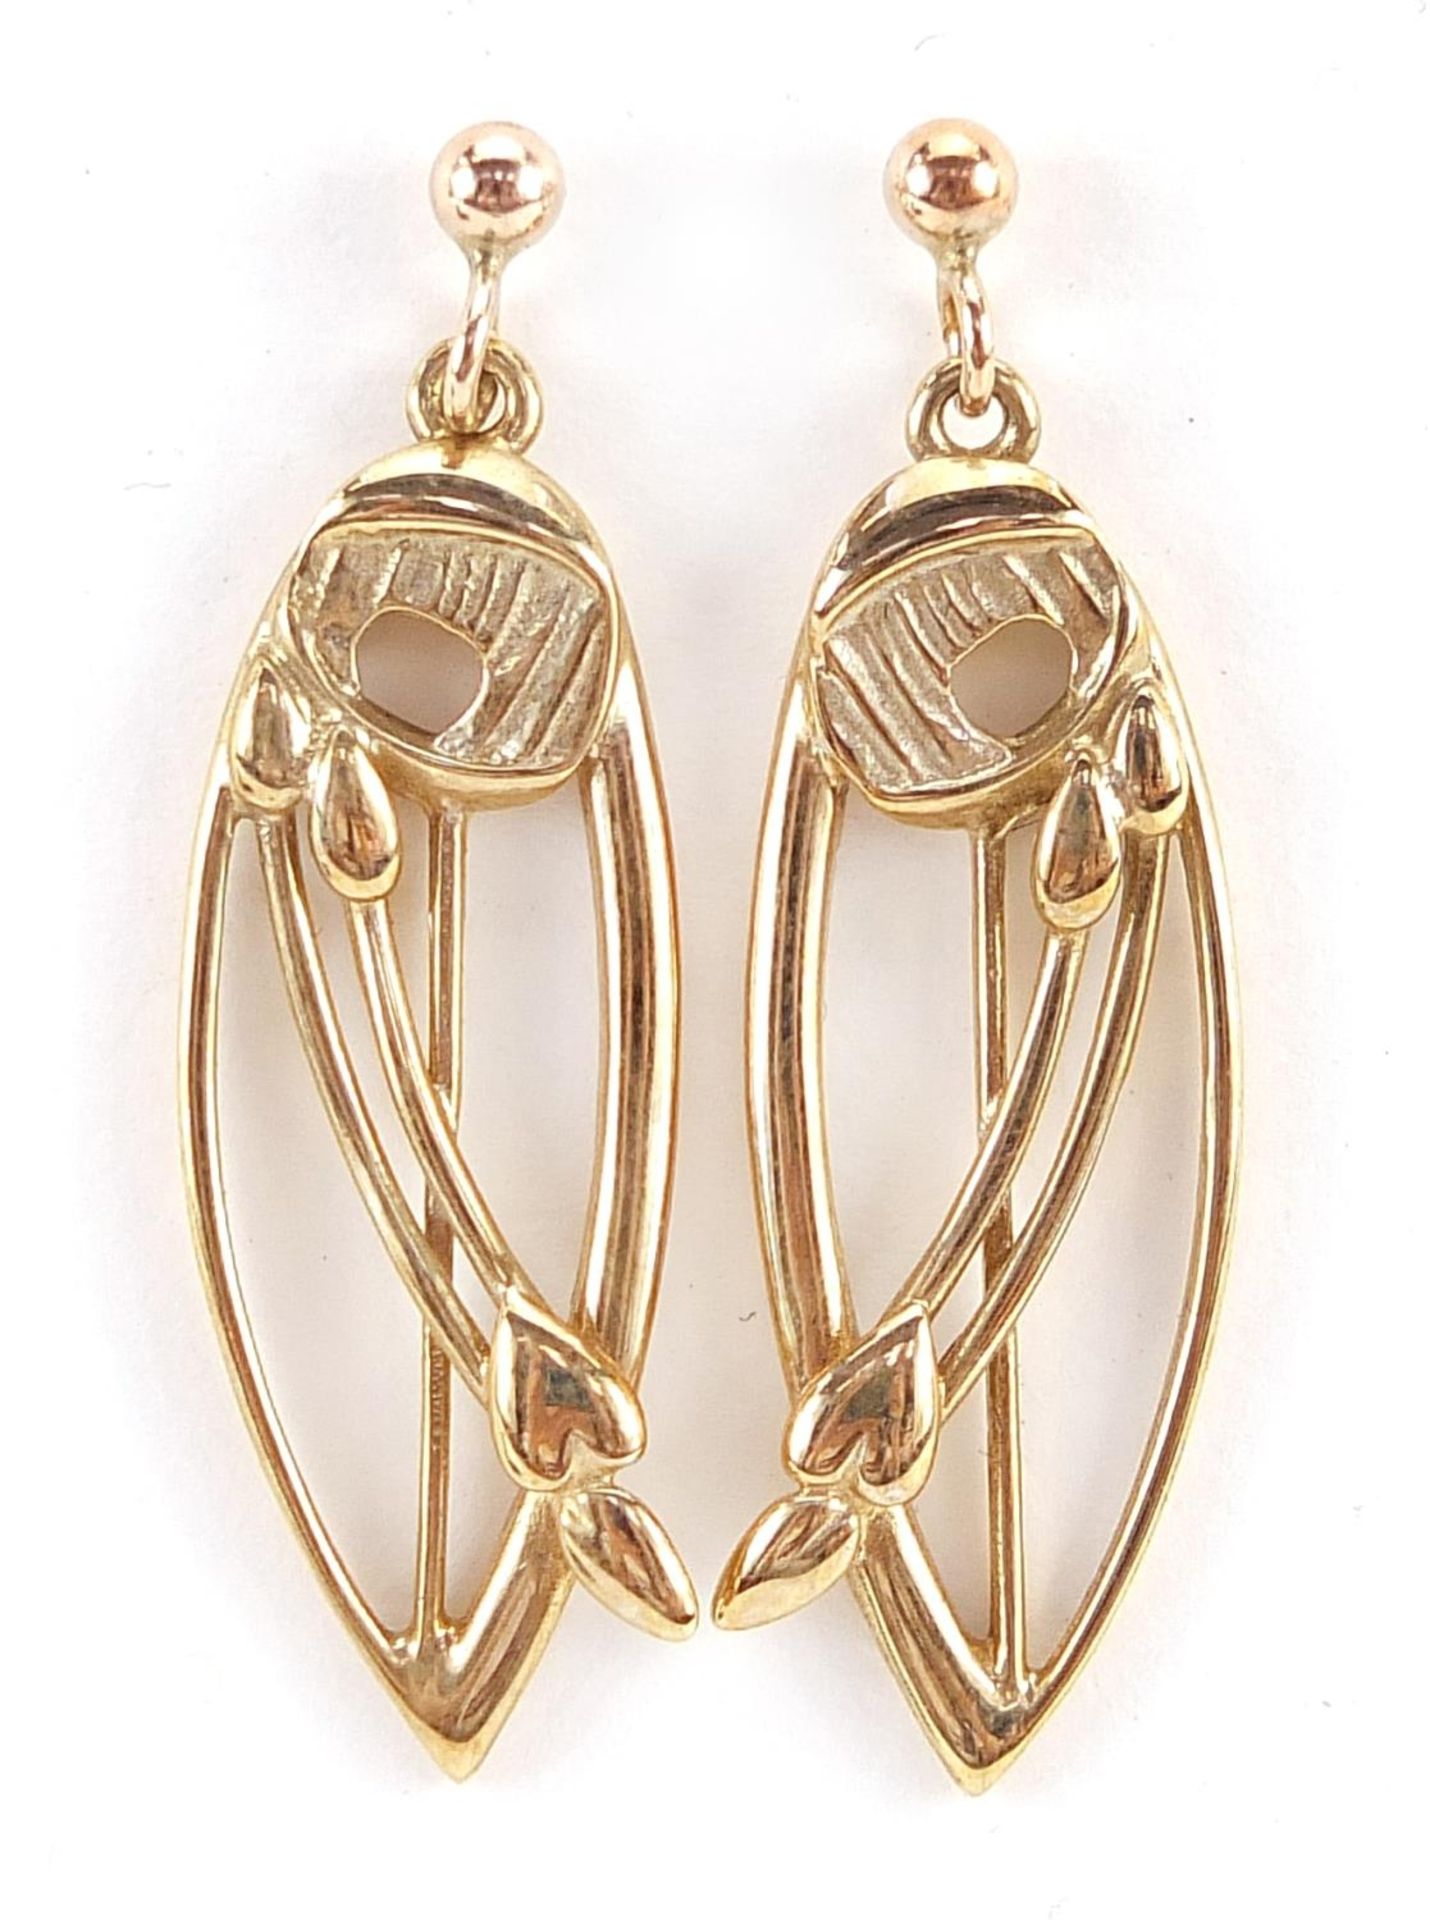 Pair of 9ct gold Rennie Mackintosh design drop earrings, 3.2cm high, 4.0g